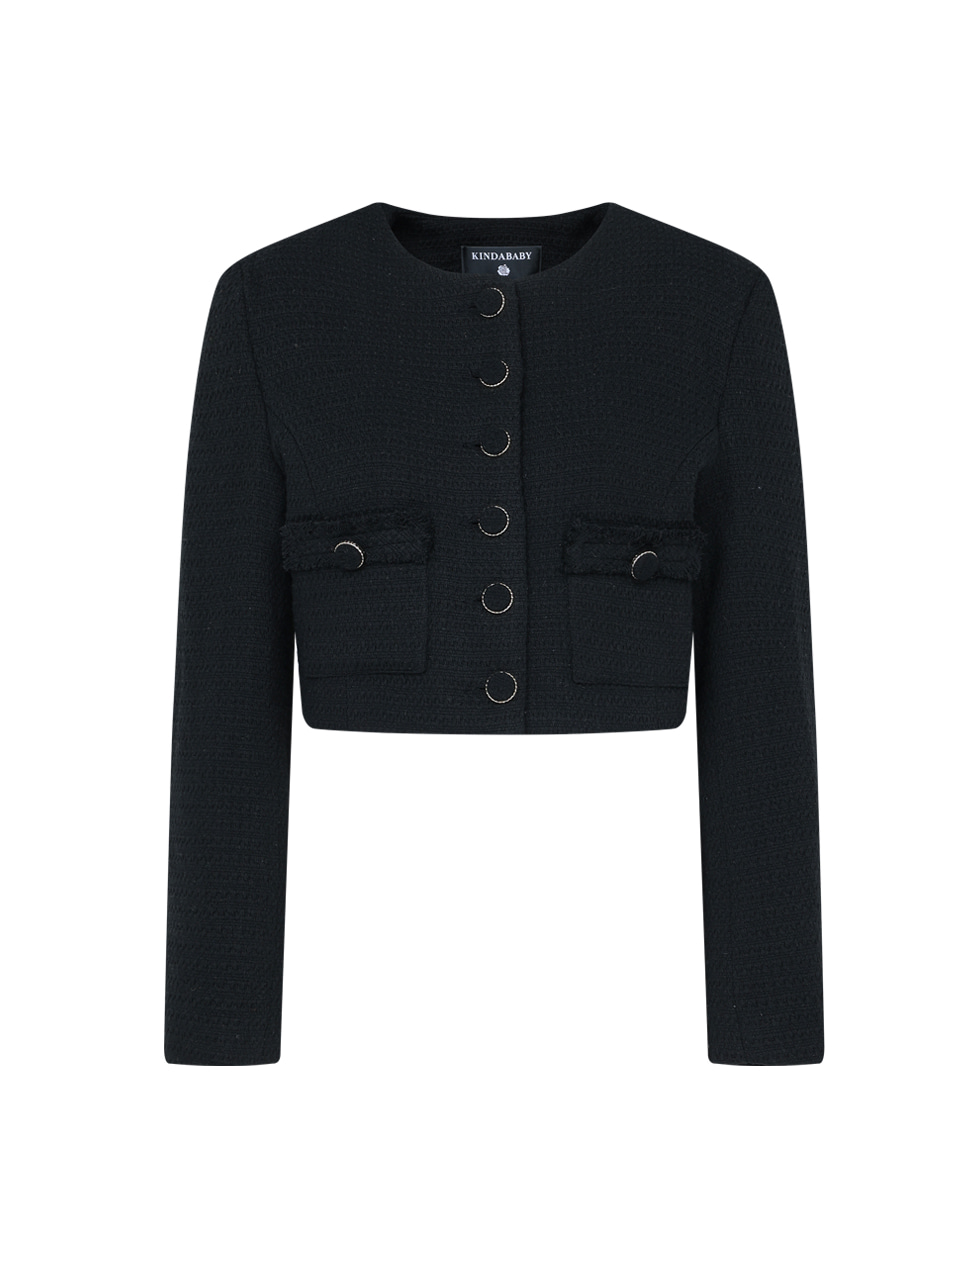 black classic tweed jacket